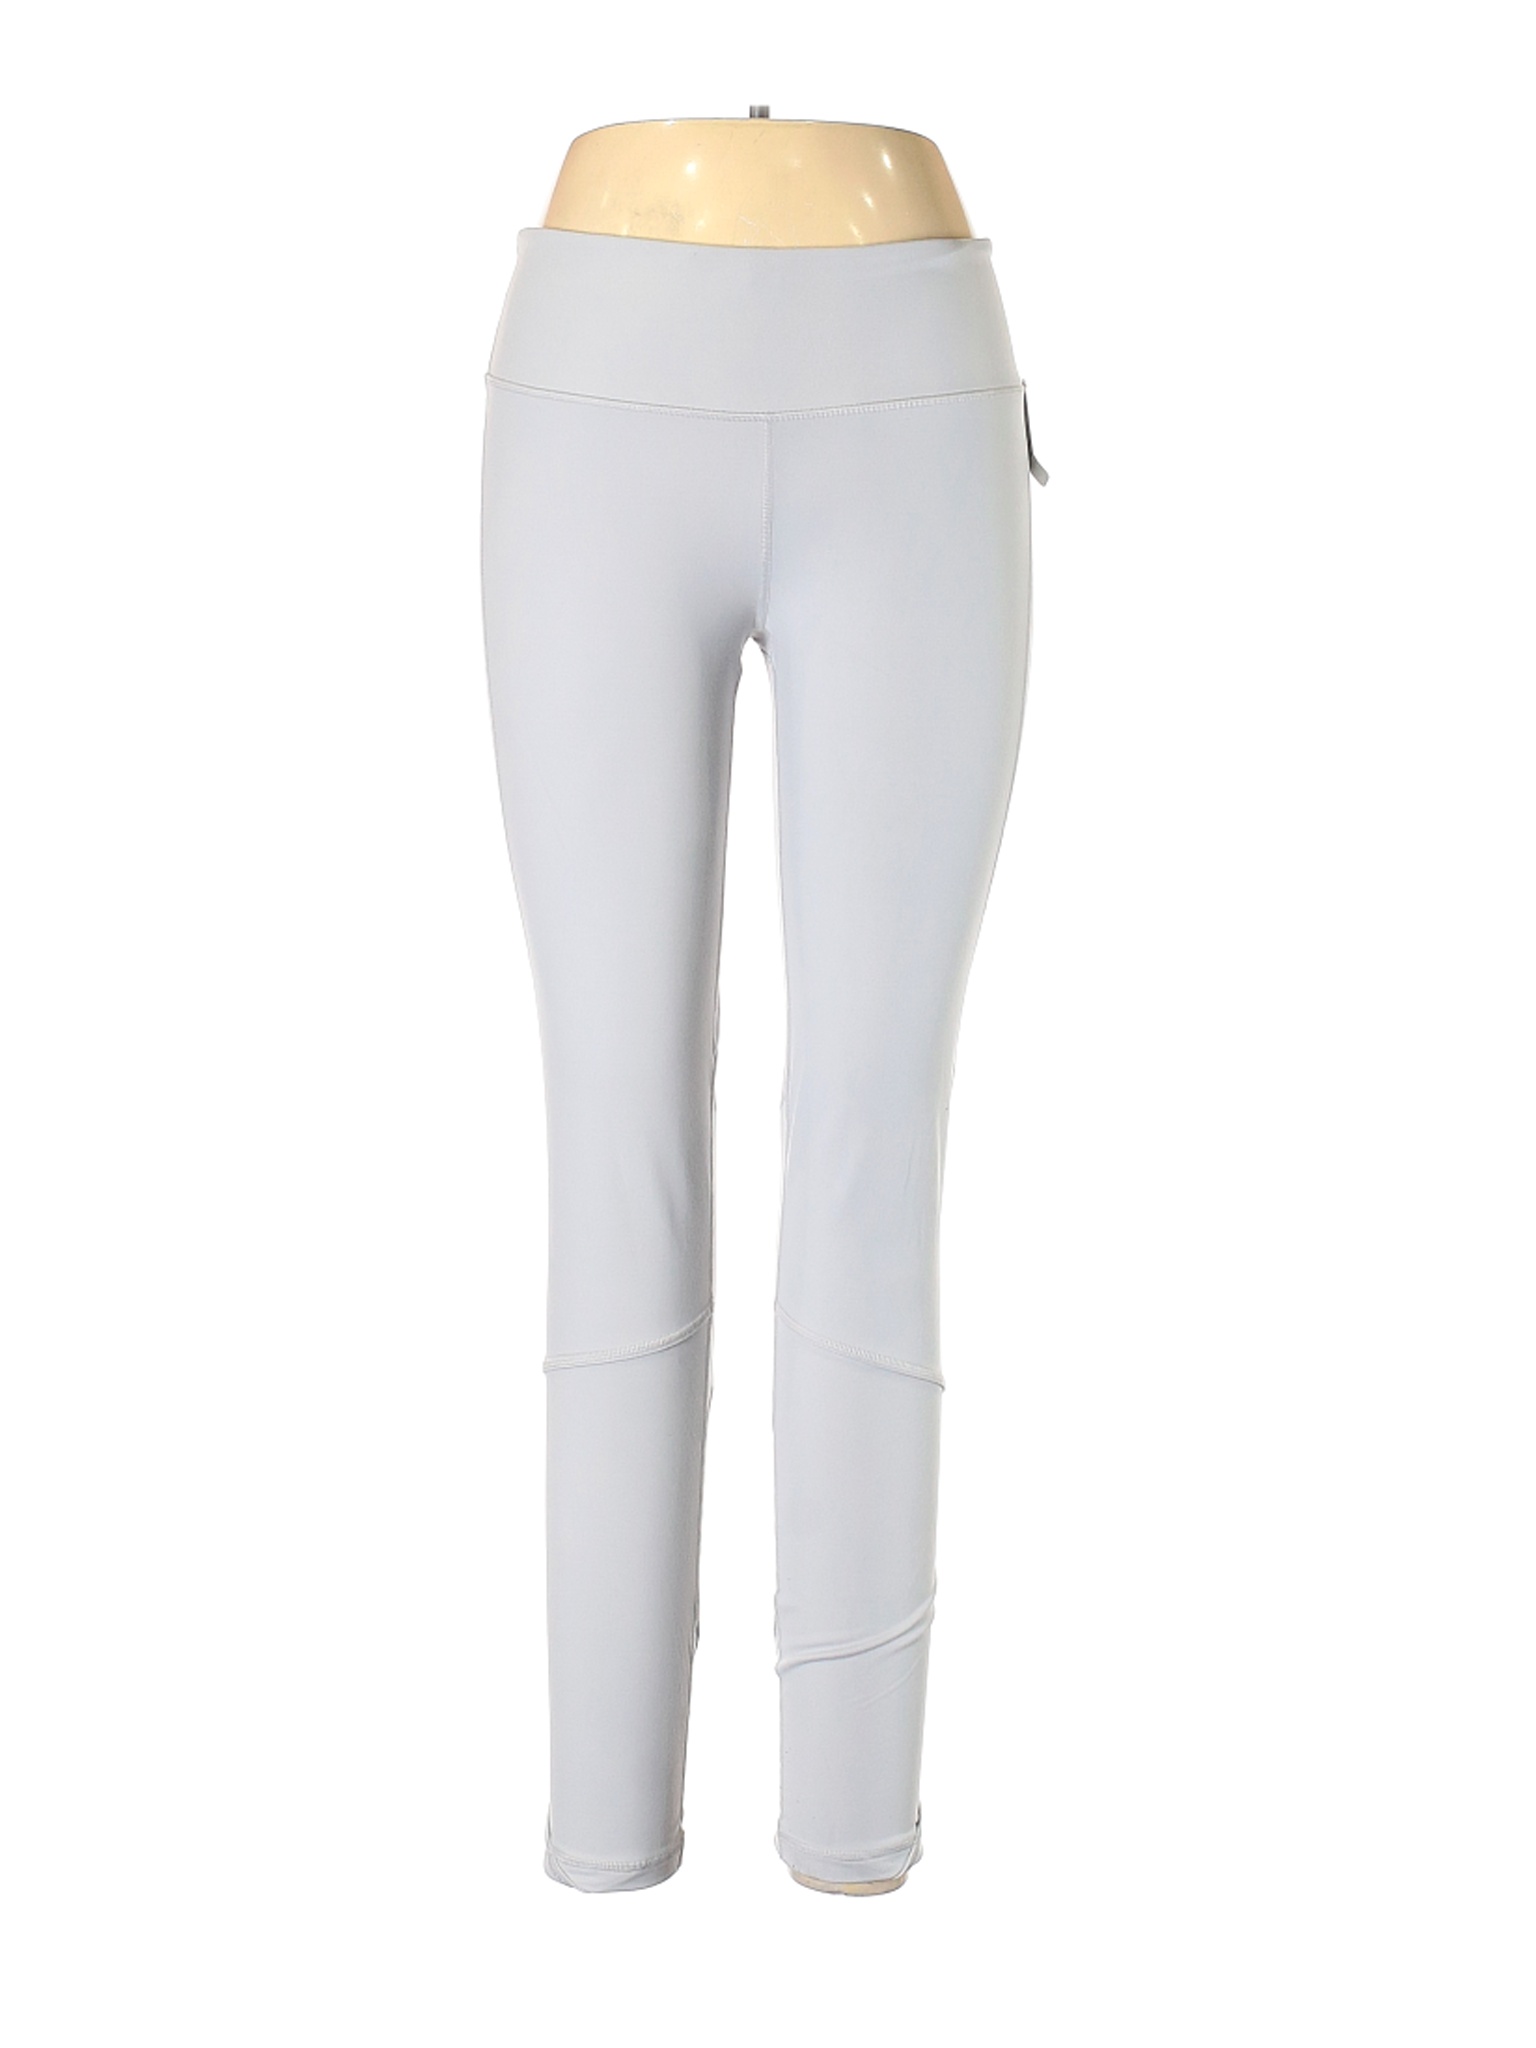 NWT Victoria Sport Women White Active Pants L | eBay